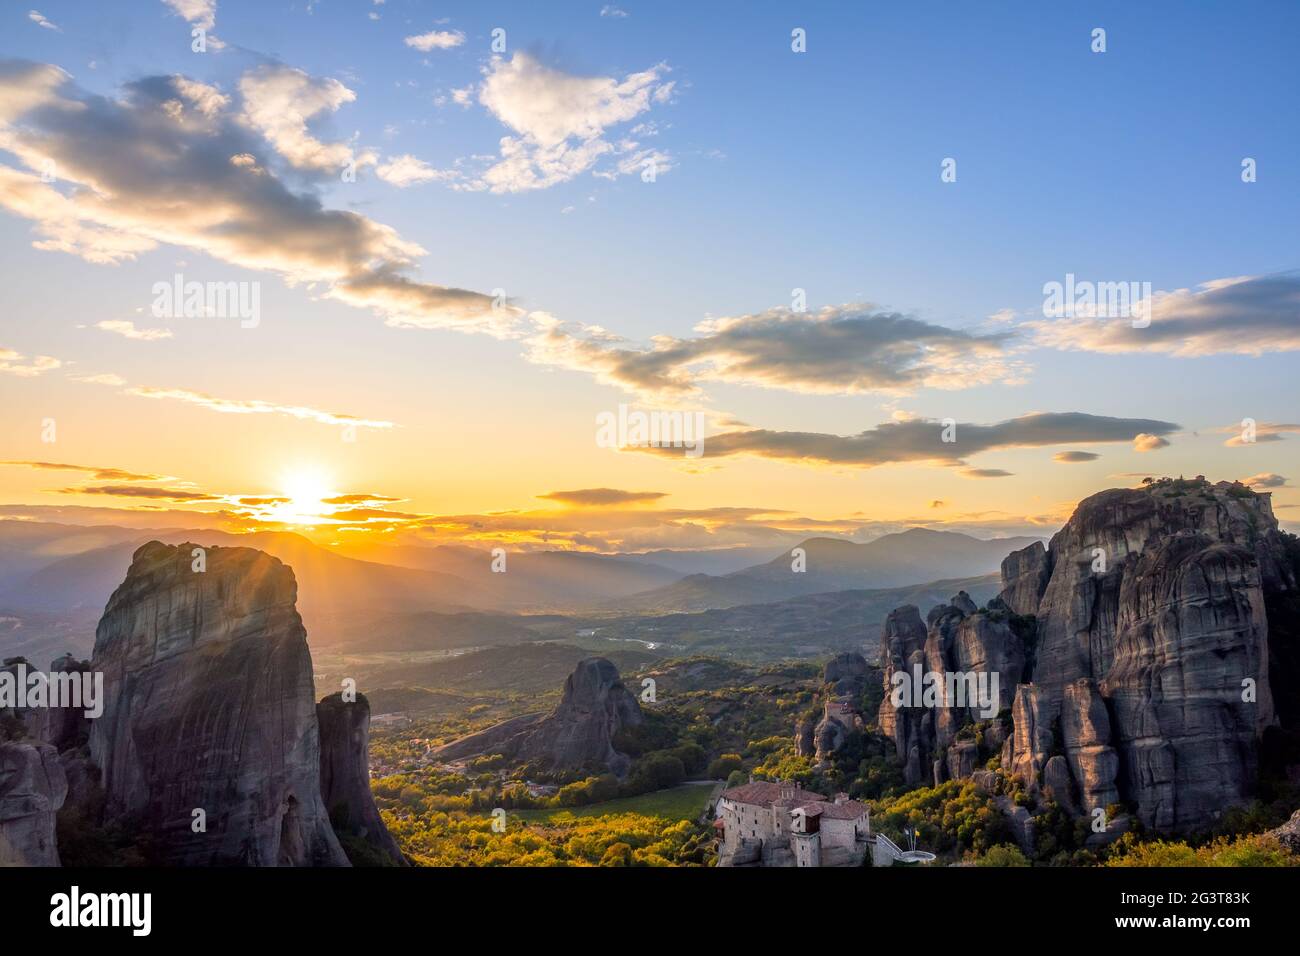 Greek Rock Monastery at Sunset Stock Photo